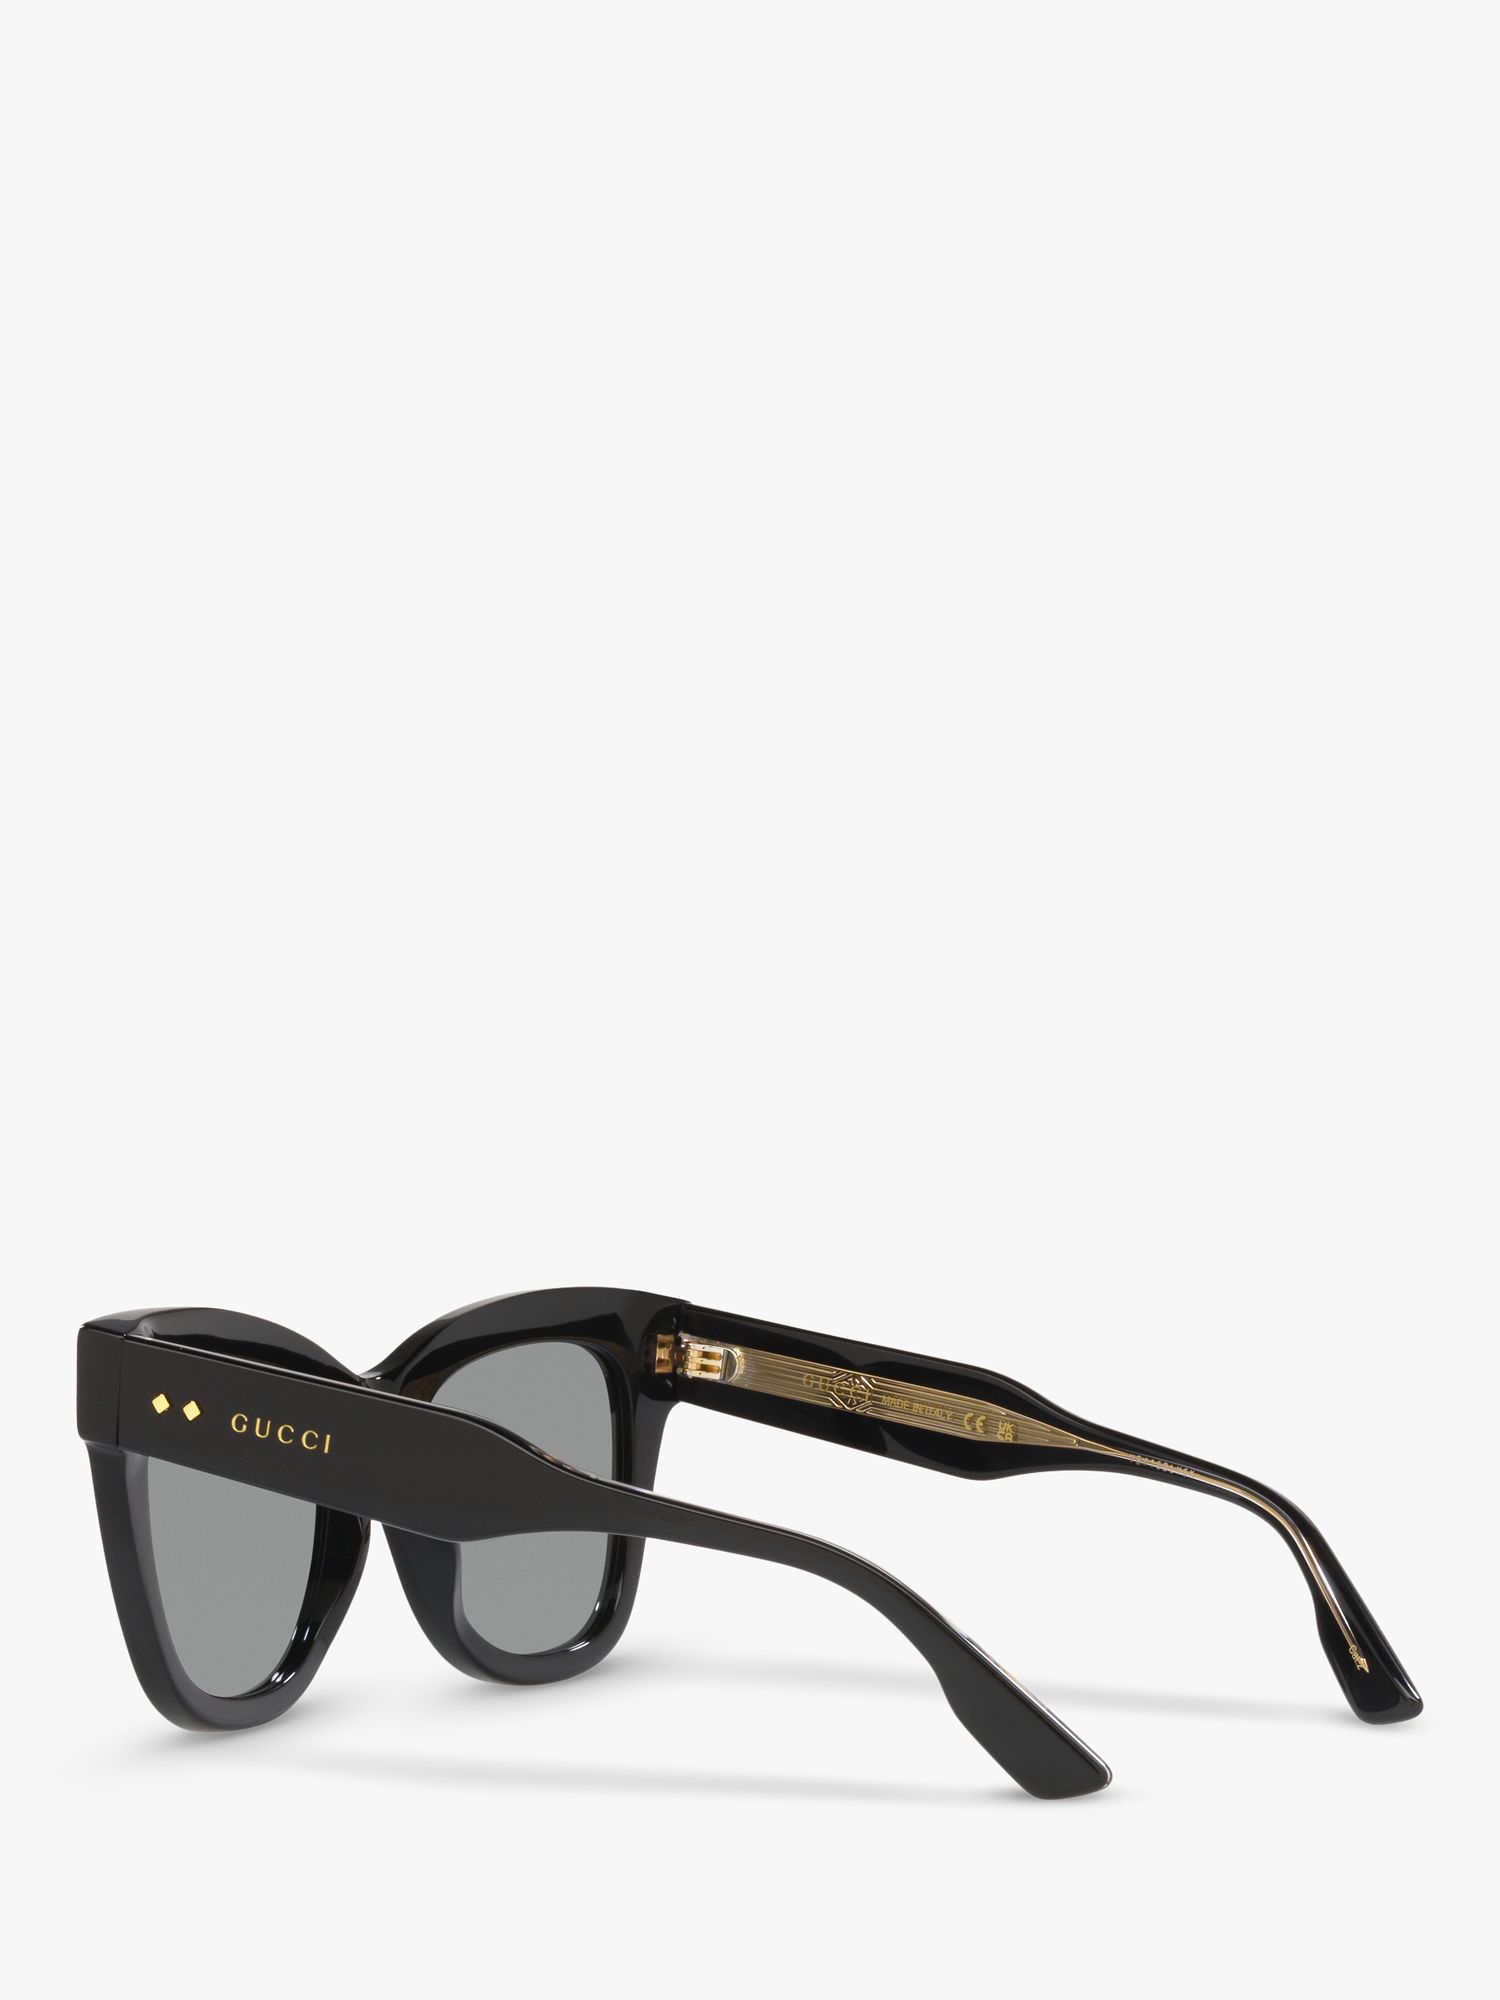 Gucci GG1082S Women's Cat's Eye Sunglasses, Black/Grey